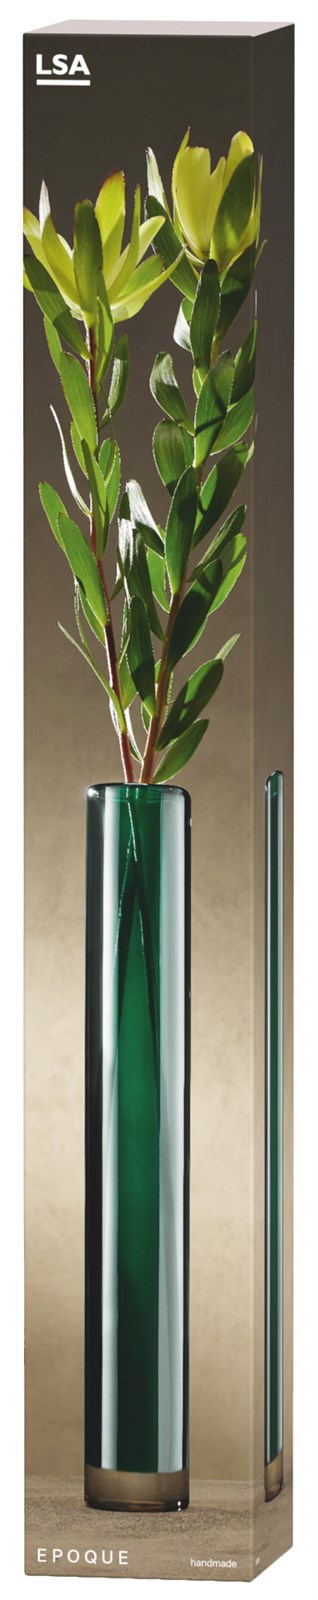 Epoque Vase H48cm Pfauenblau Lüster - KAQTU Design